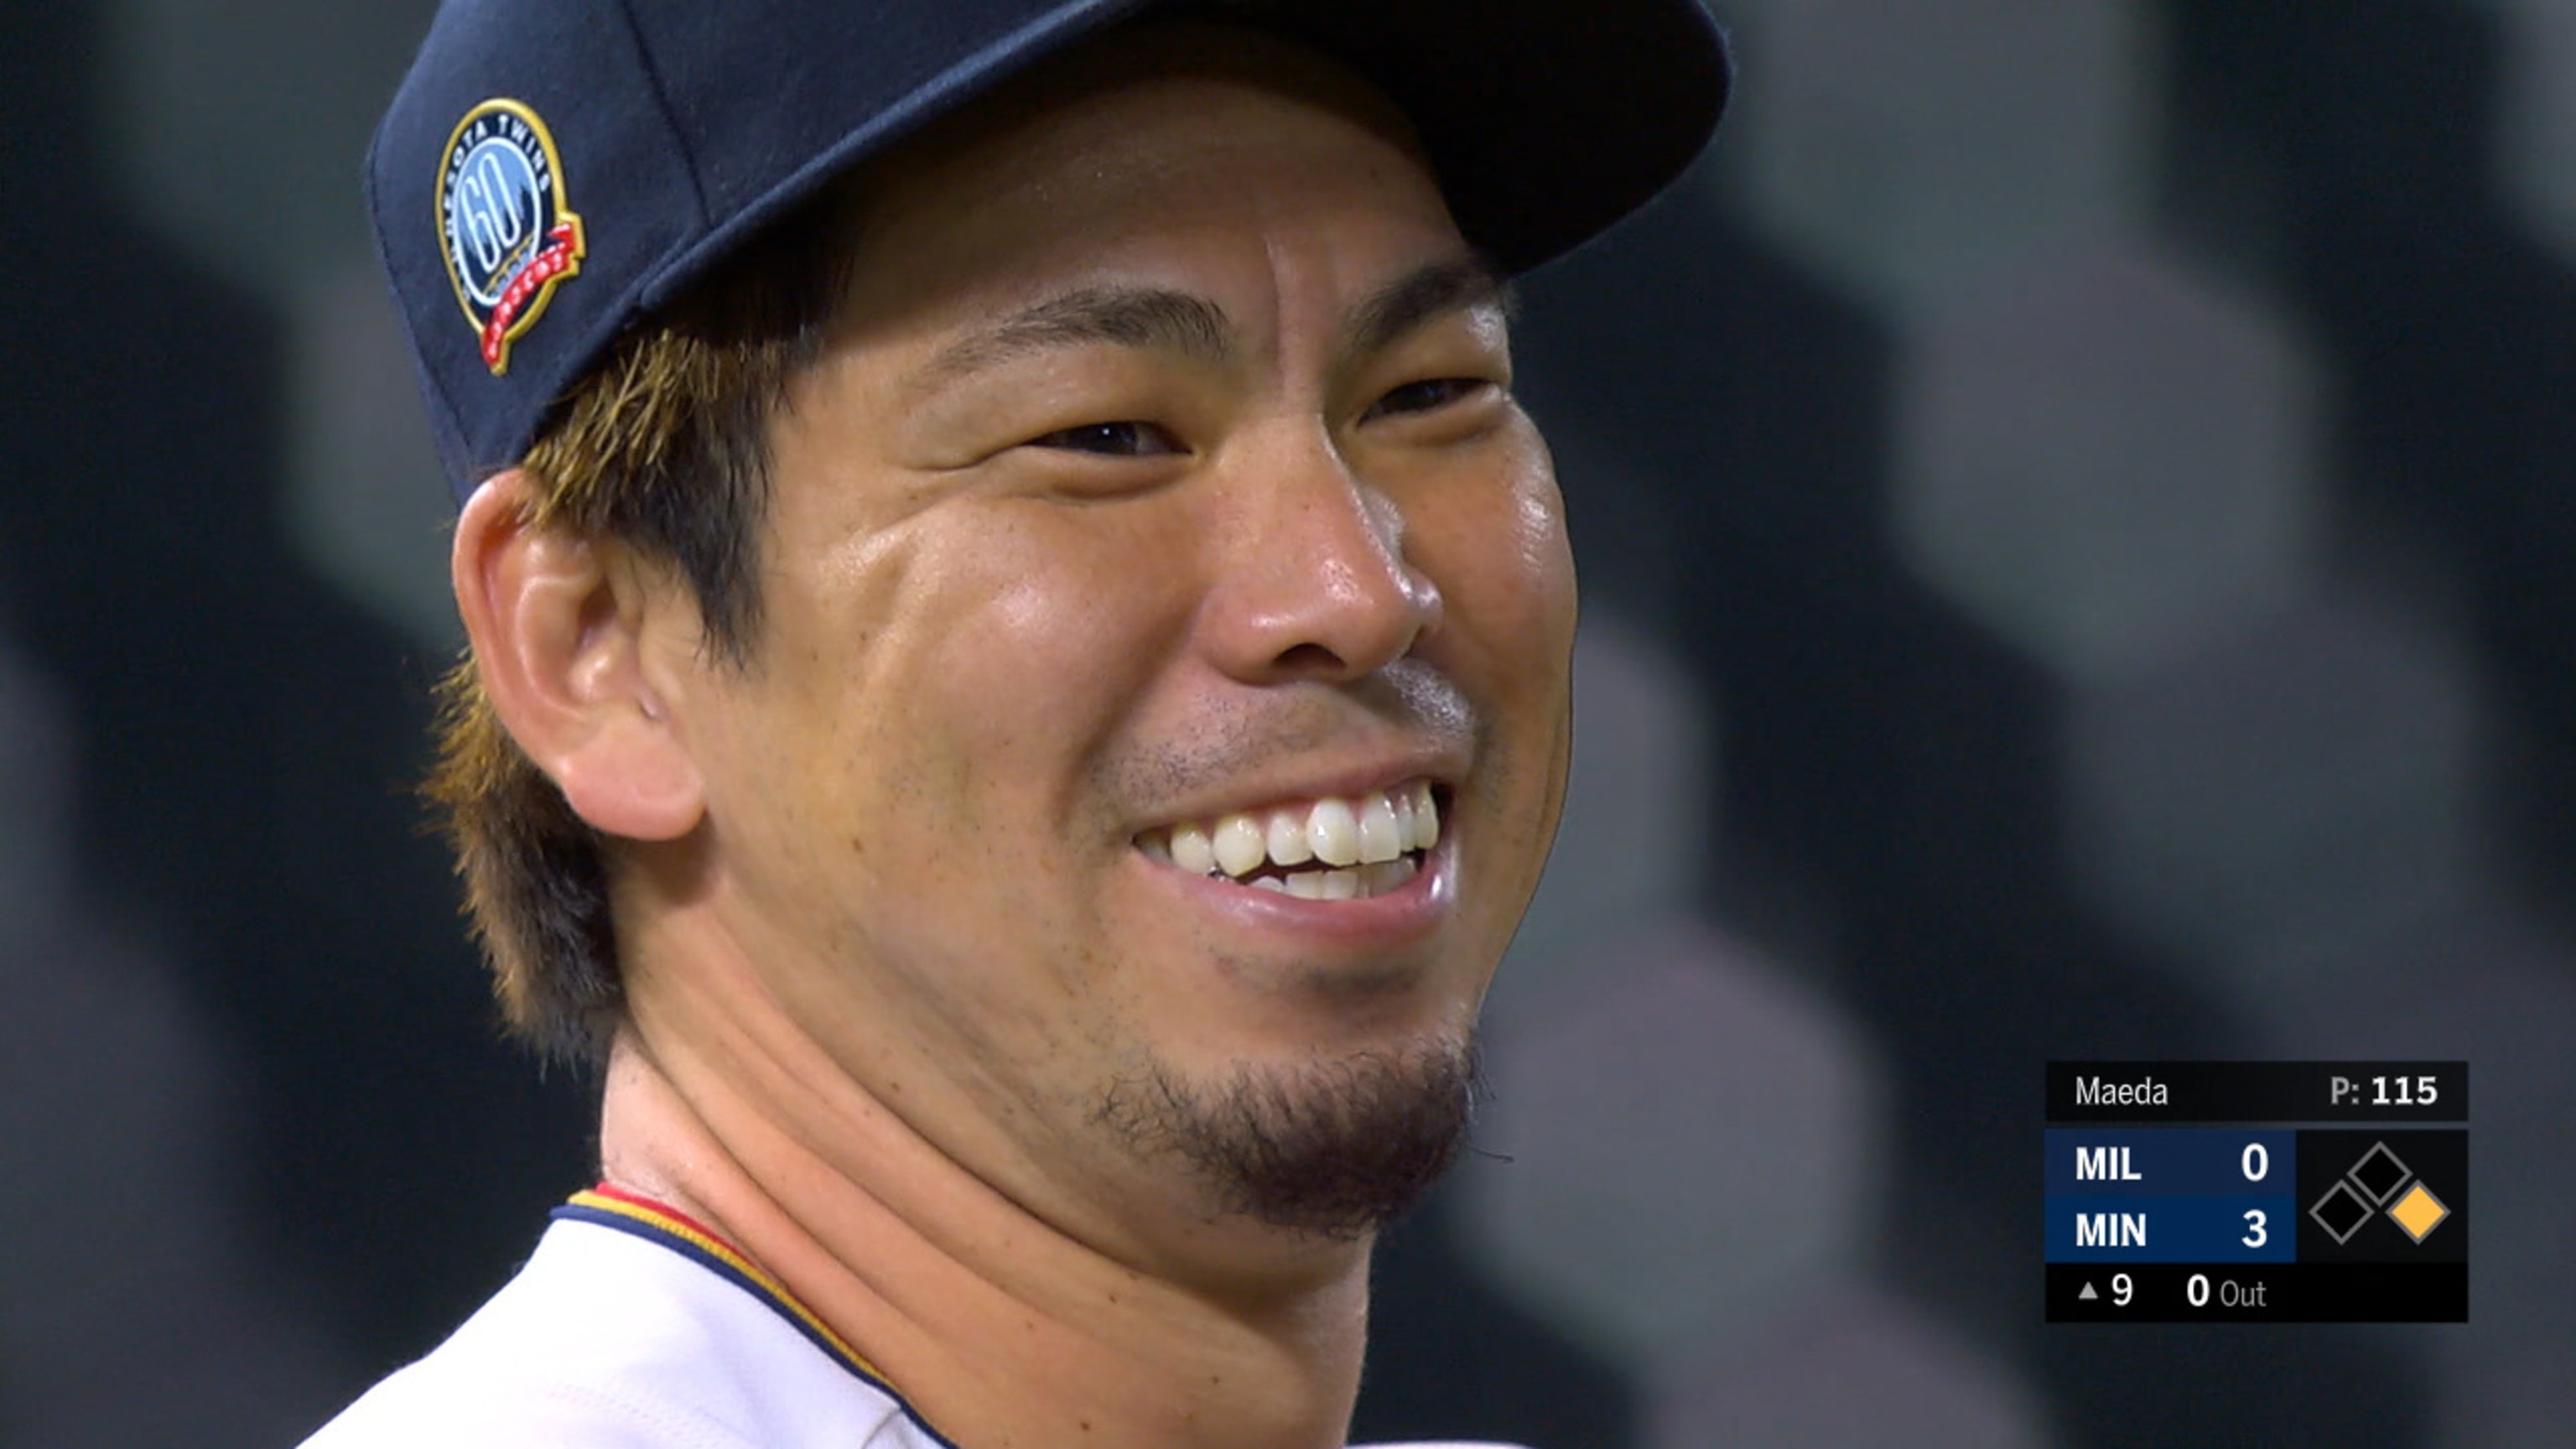 Baseball: Kenta Maeda's season over as Astros beat Twins to win ALDS - The  Mainichi